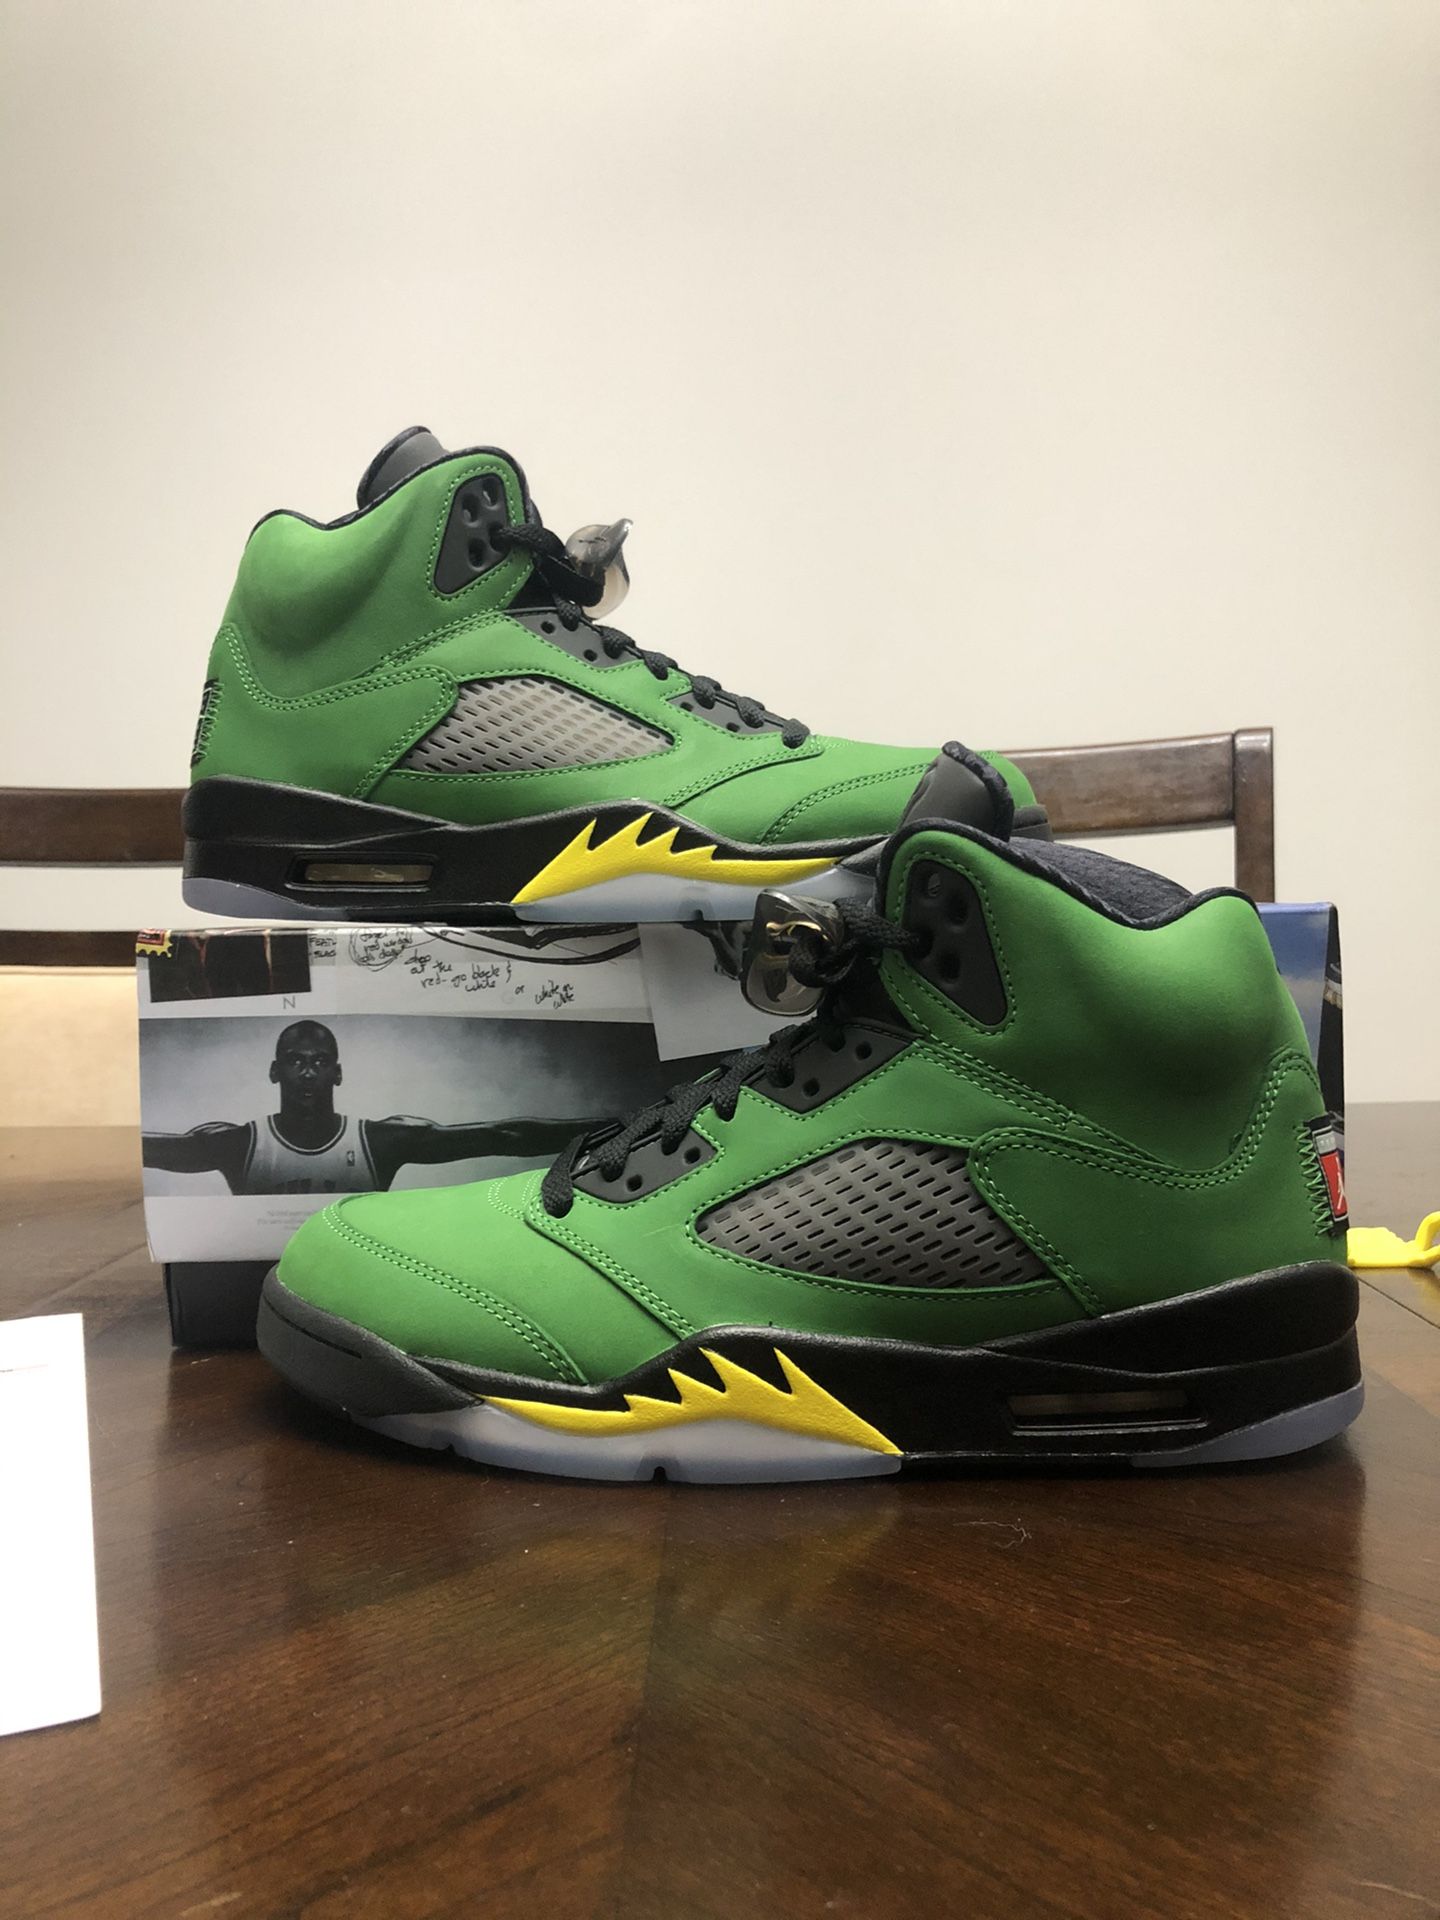 Jordan 5 Retro “Oregon” Apple Green Size 8.5